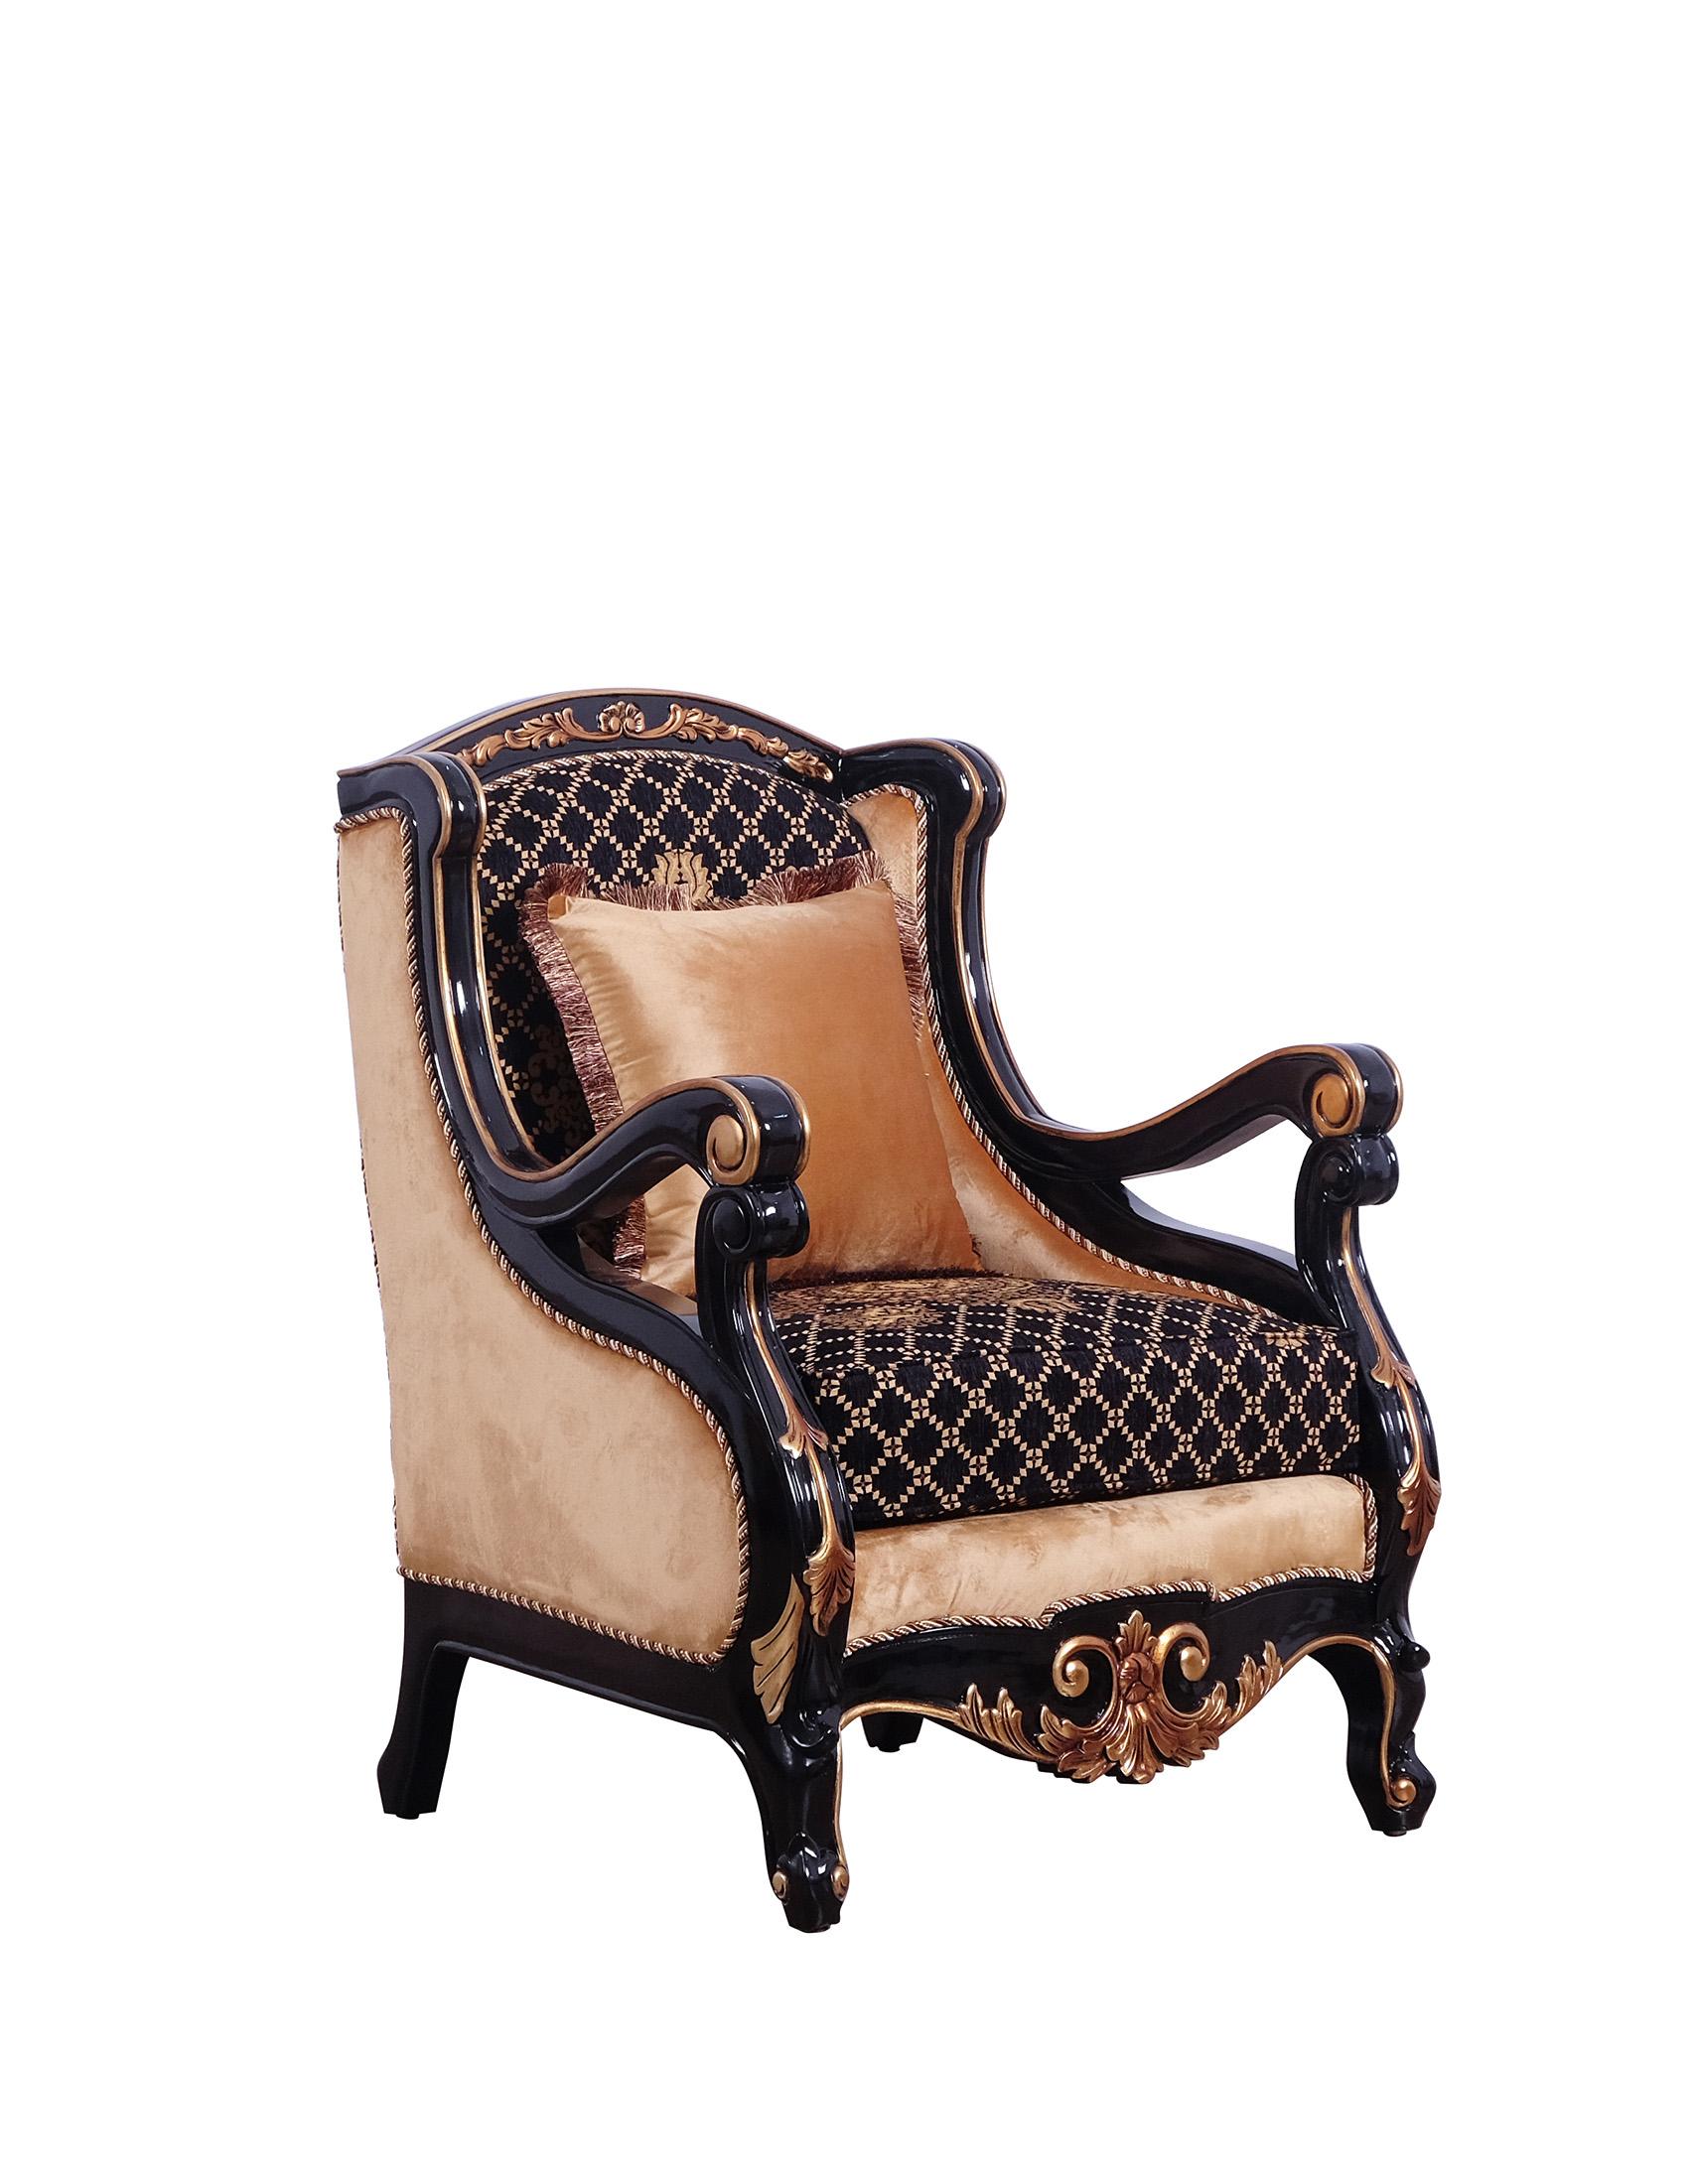 Classic, Traditional Arm Chair RAFFAELLO 41024-C in Antique, Silver, Gold, Black Fabric